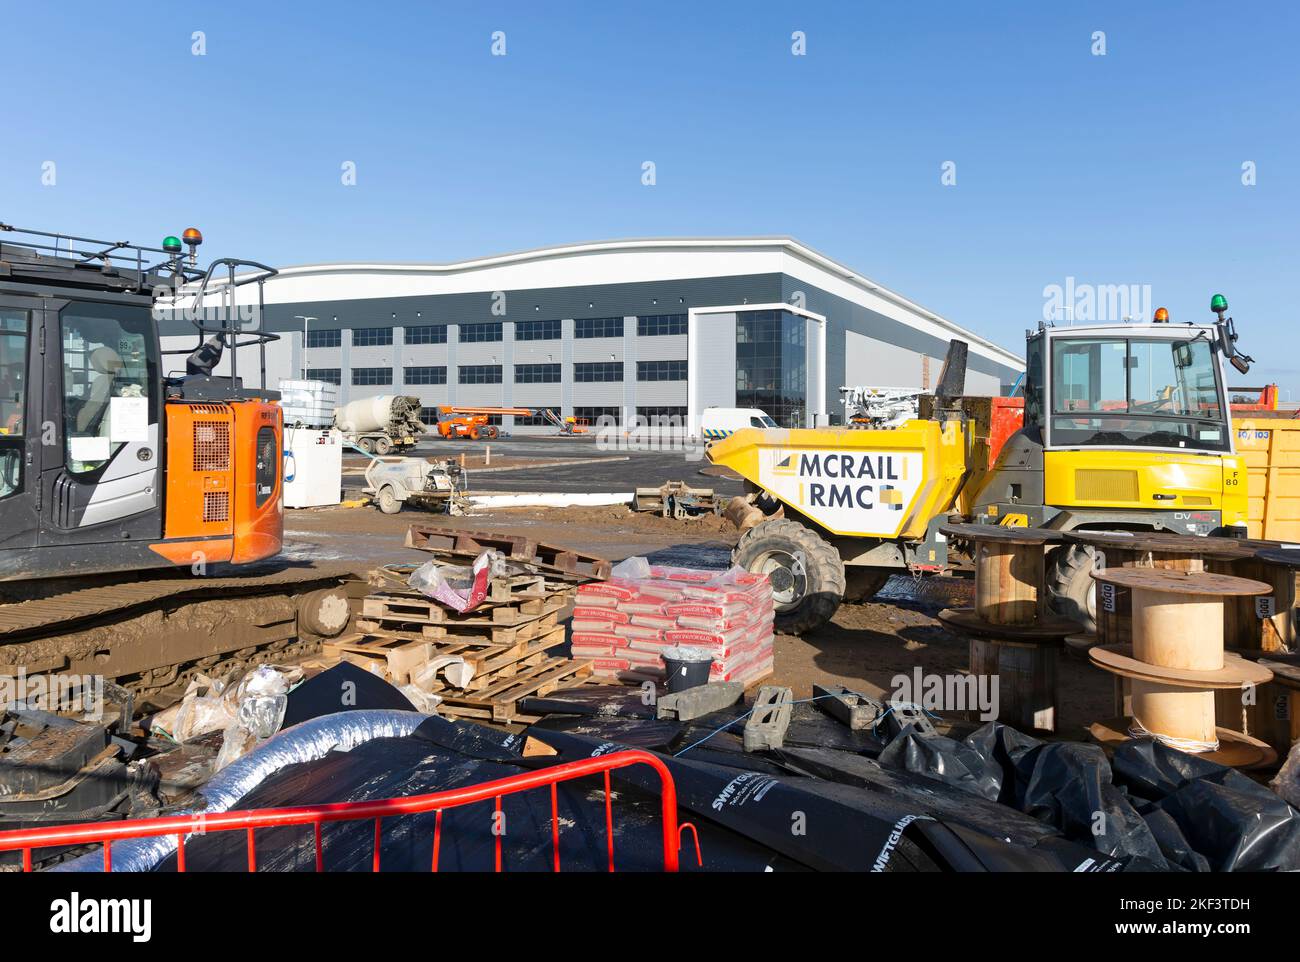 Construction site large warehouse building, Orwell Logistics Park, Nacton Heath, Ipswich, Suffolk, England, UK Stock Photo